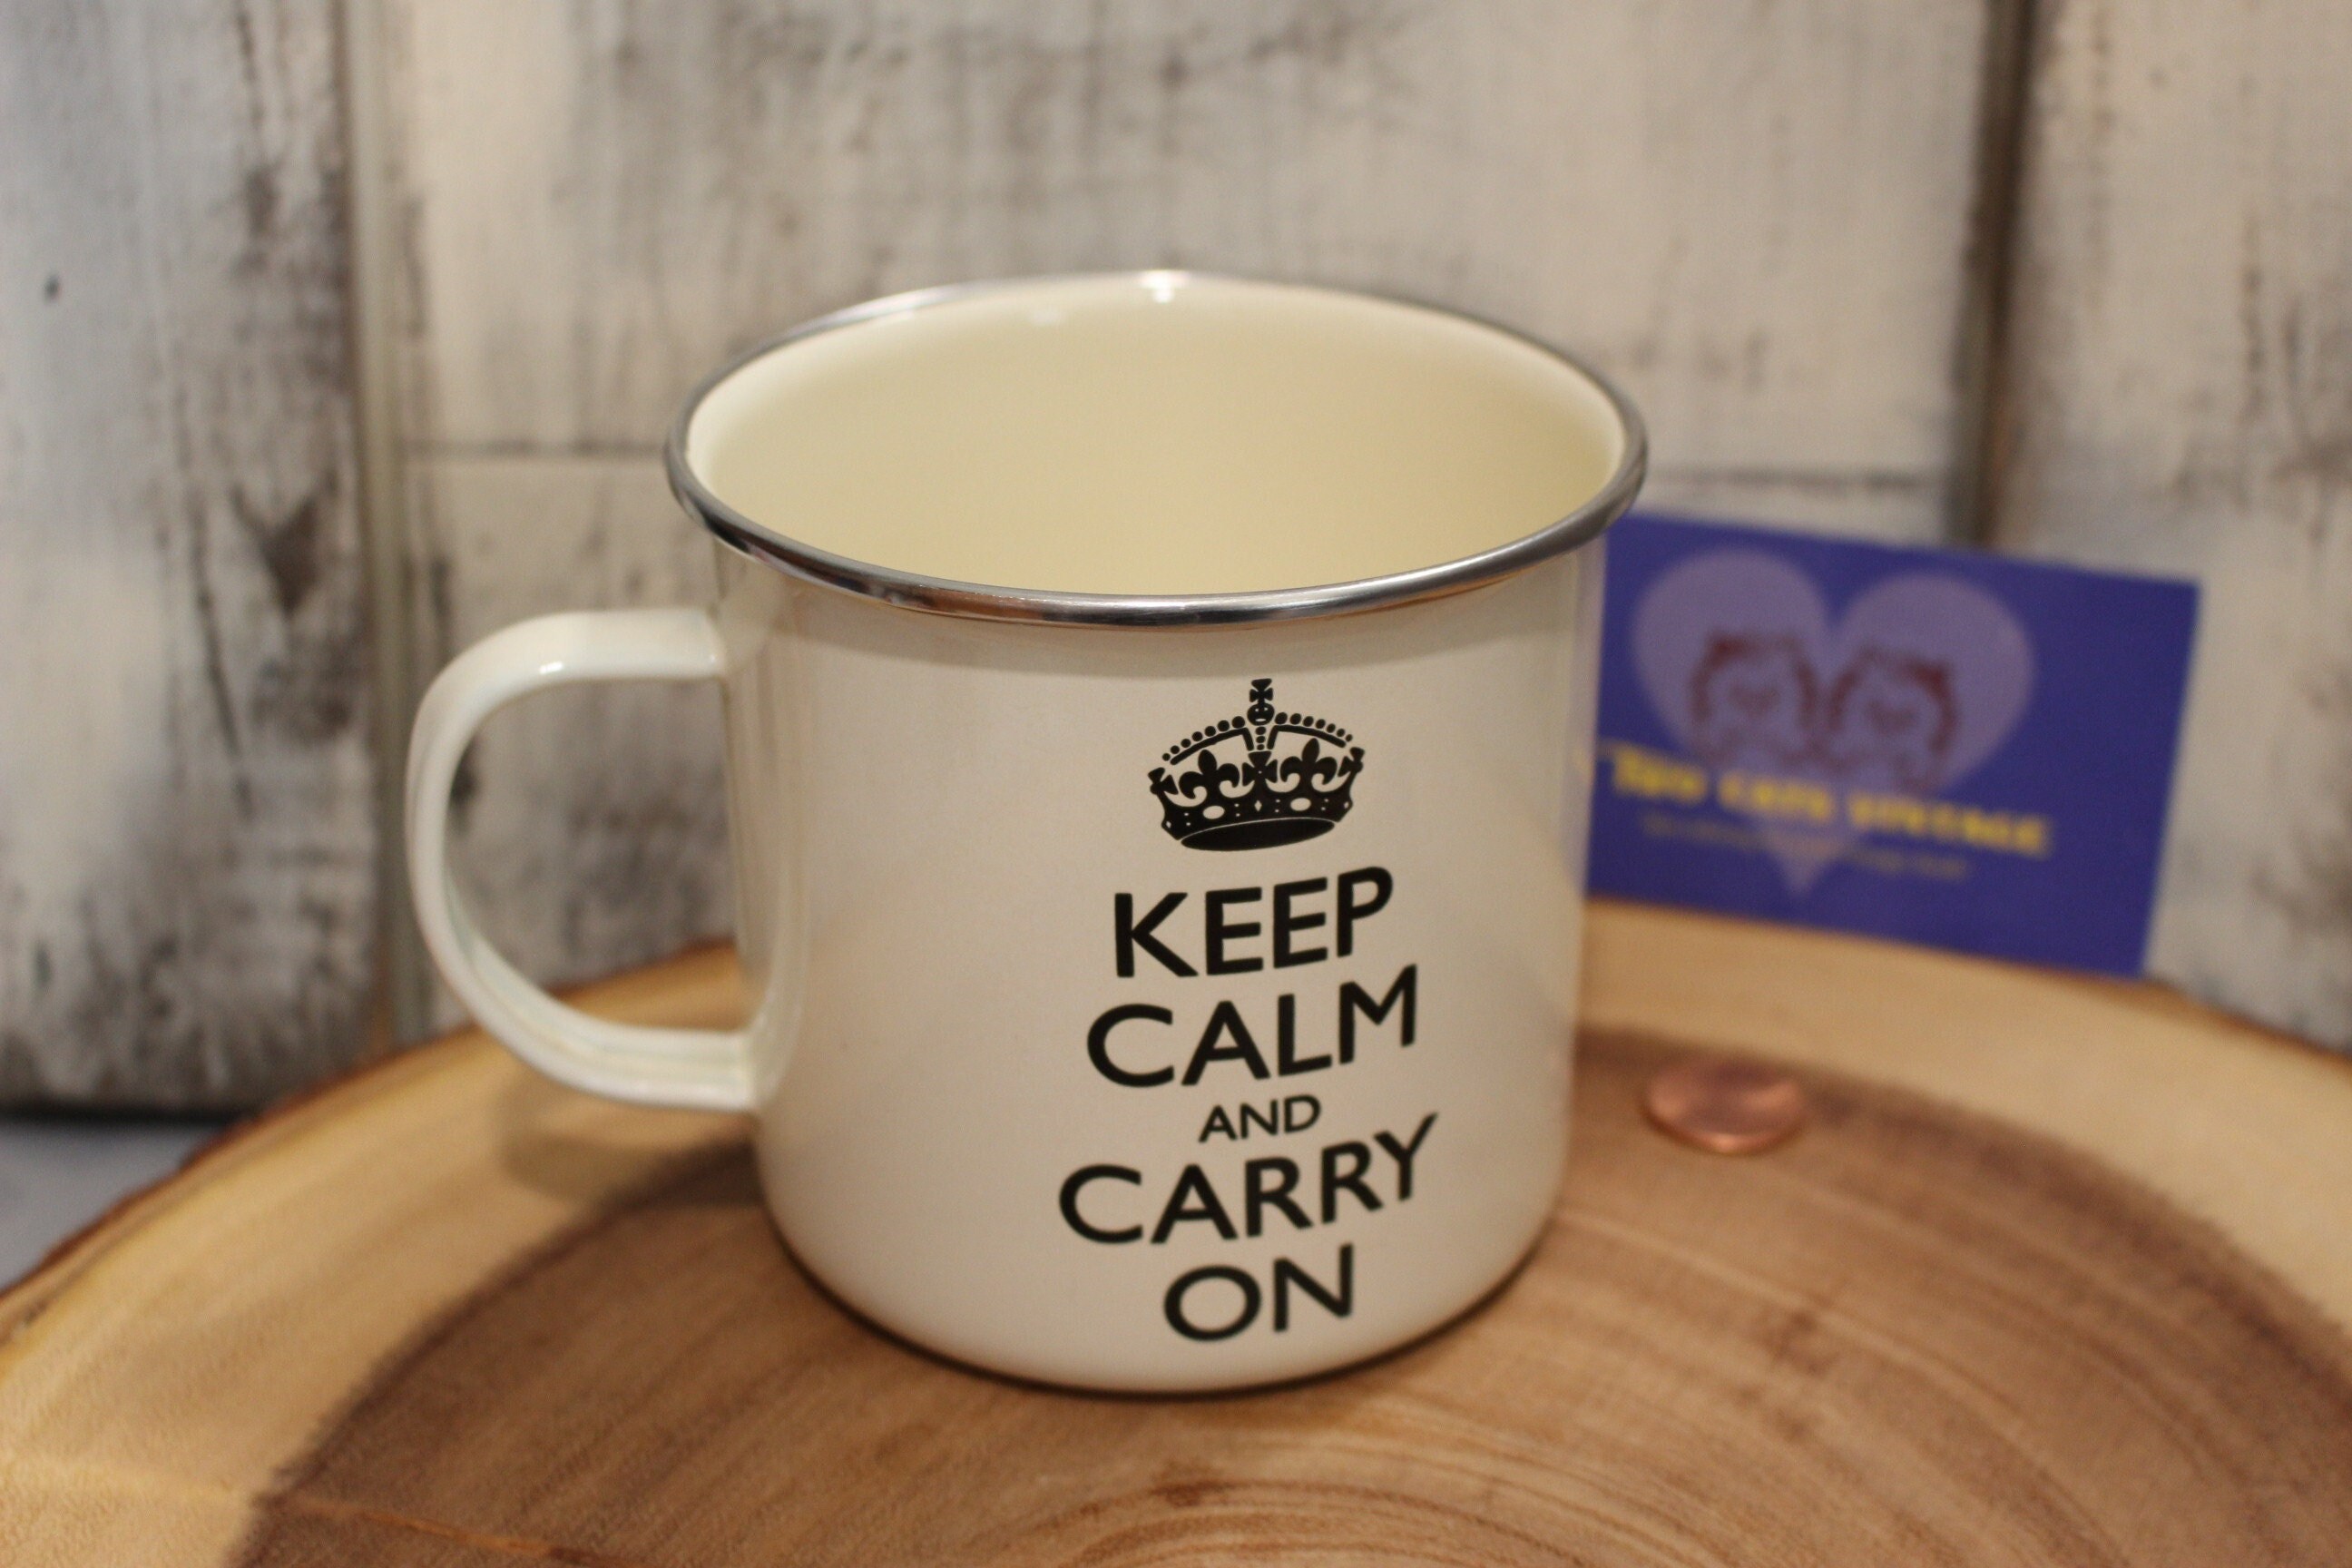 Keep Calm and Press On Mug for AeroPress Fans [Blue]